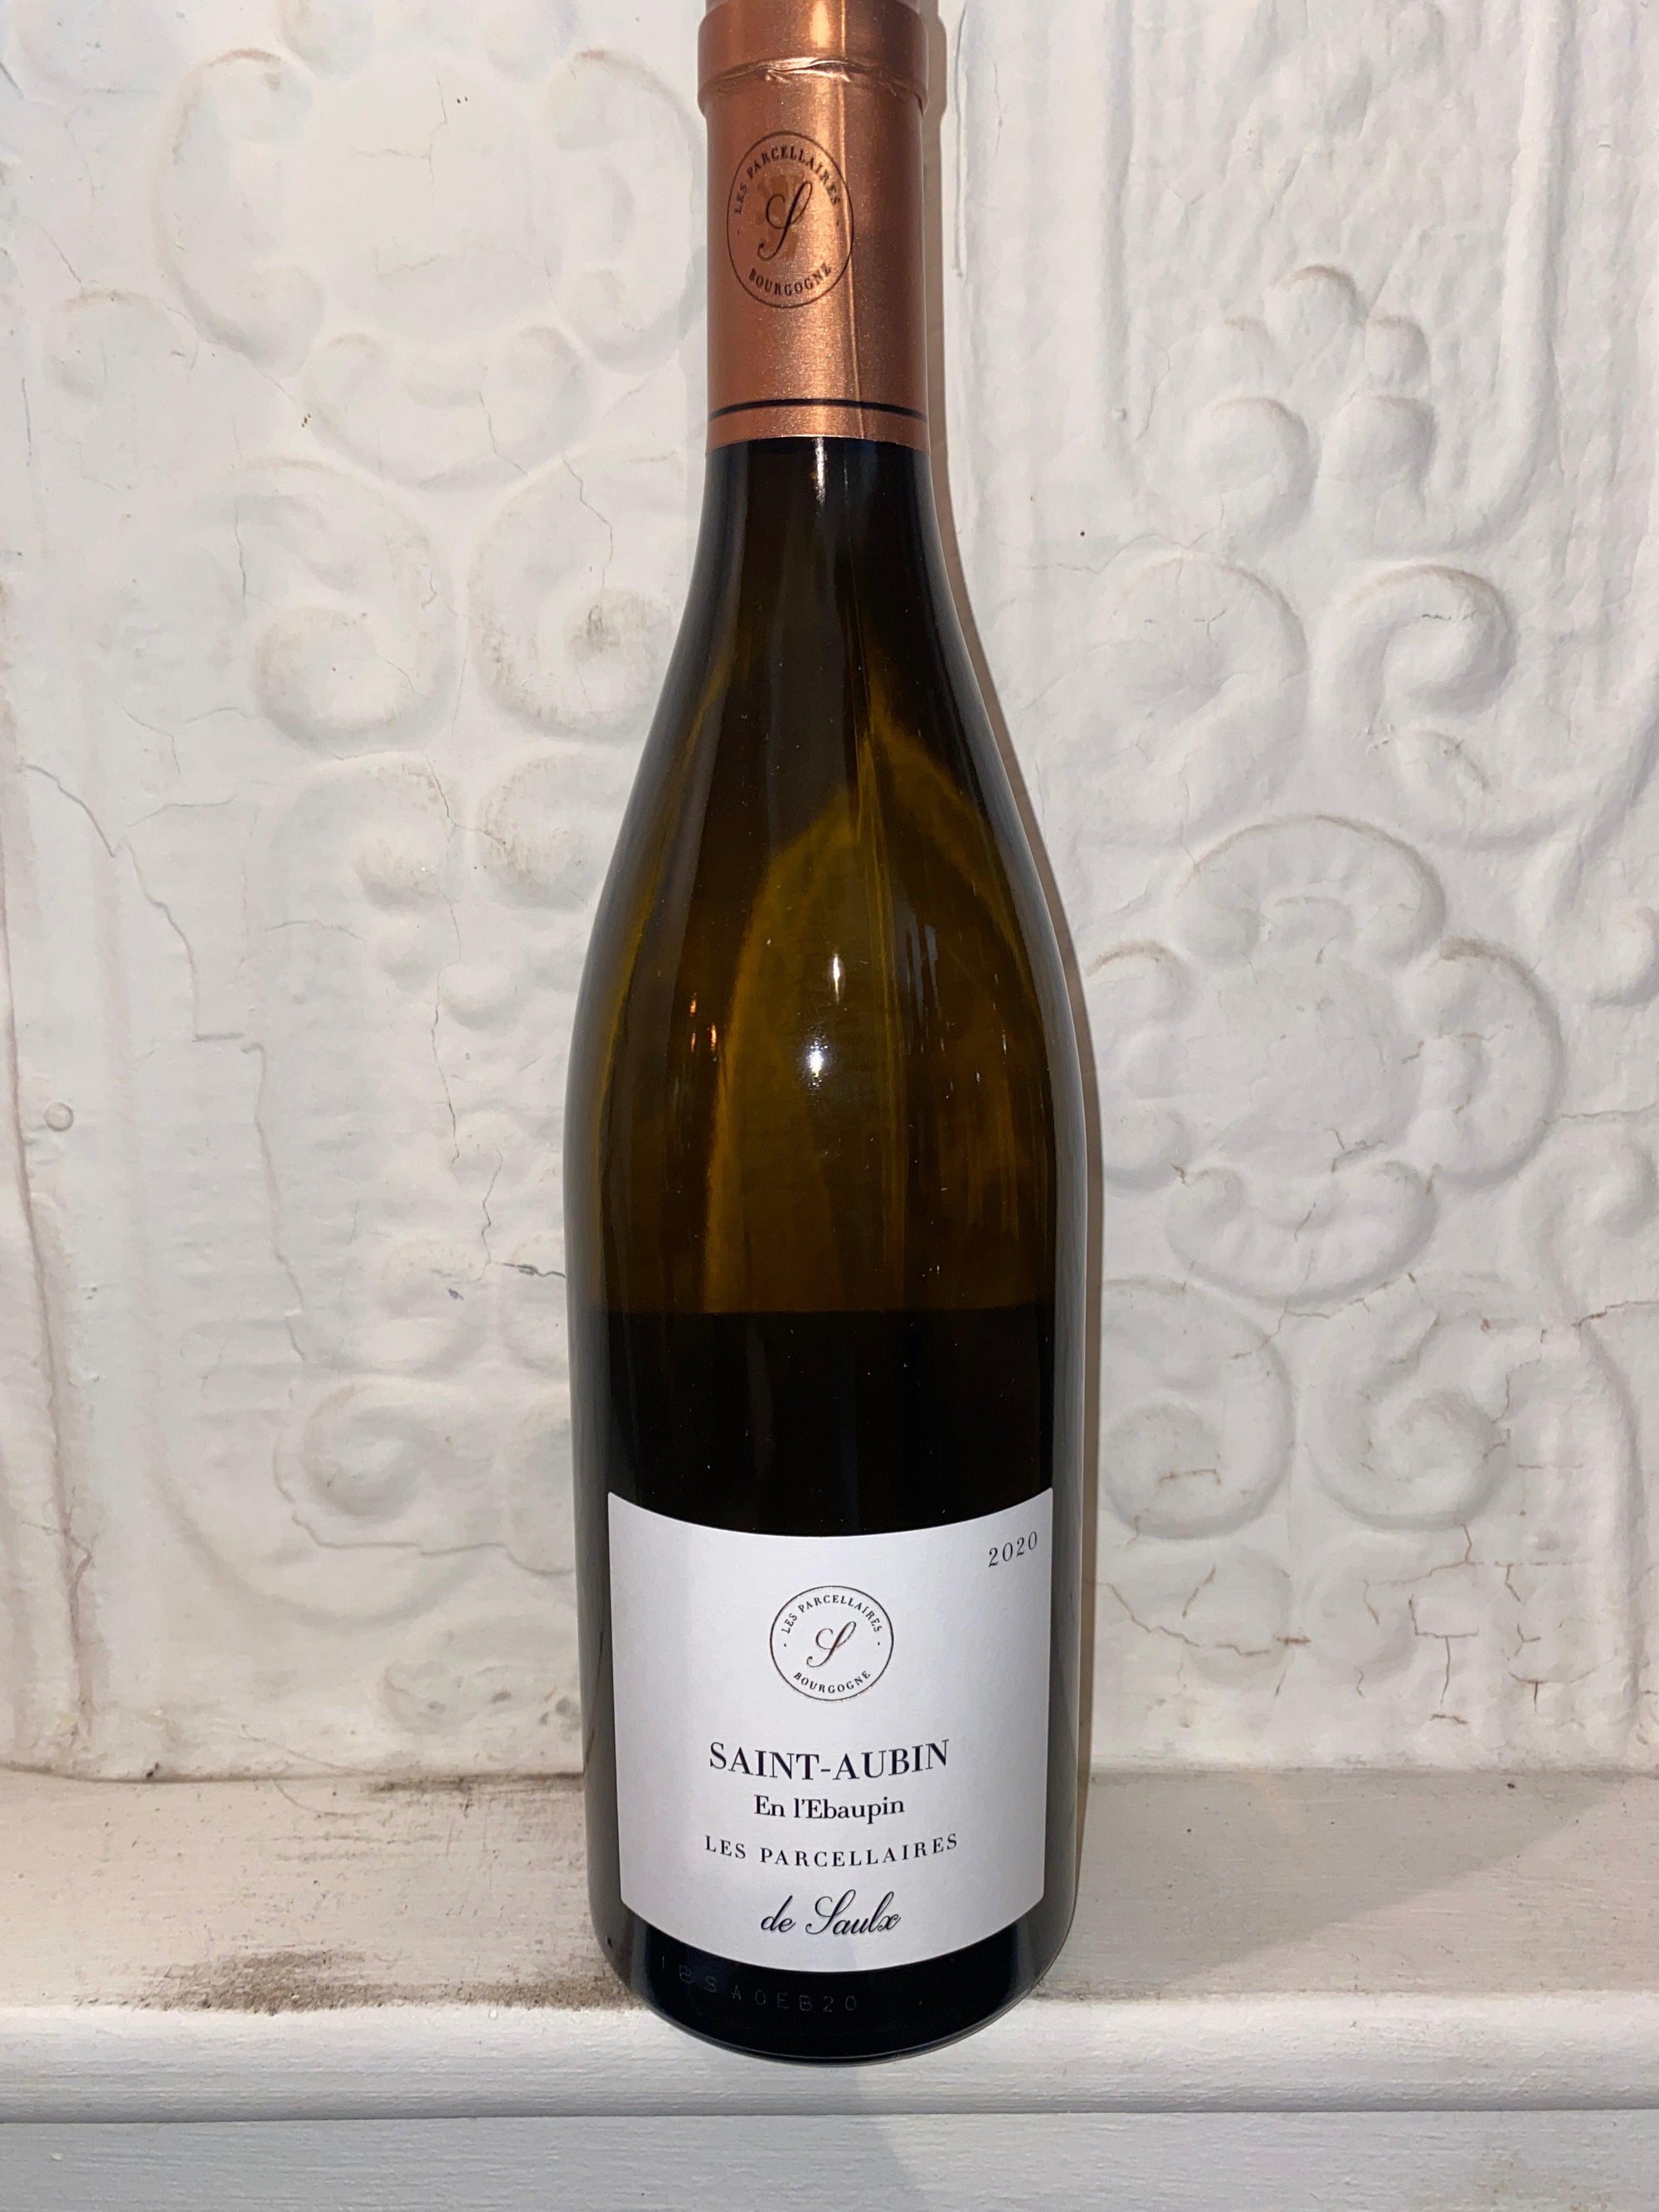 Saint Aubin Blanc "En Ebaupin", Parcellaires de Saulx 2020 (Burgundy, France)-Wine-Bibber & Bell